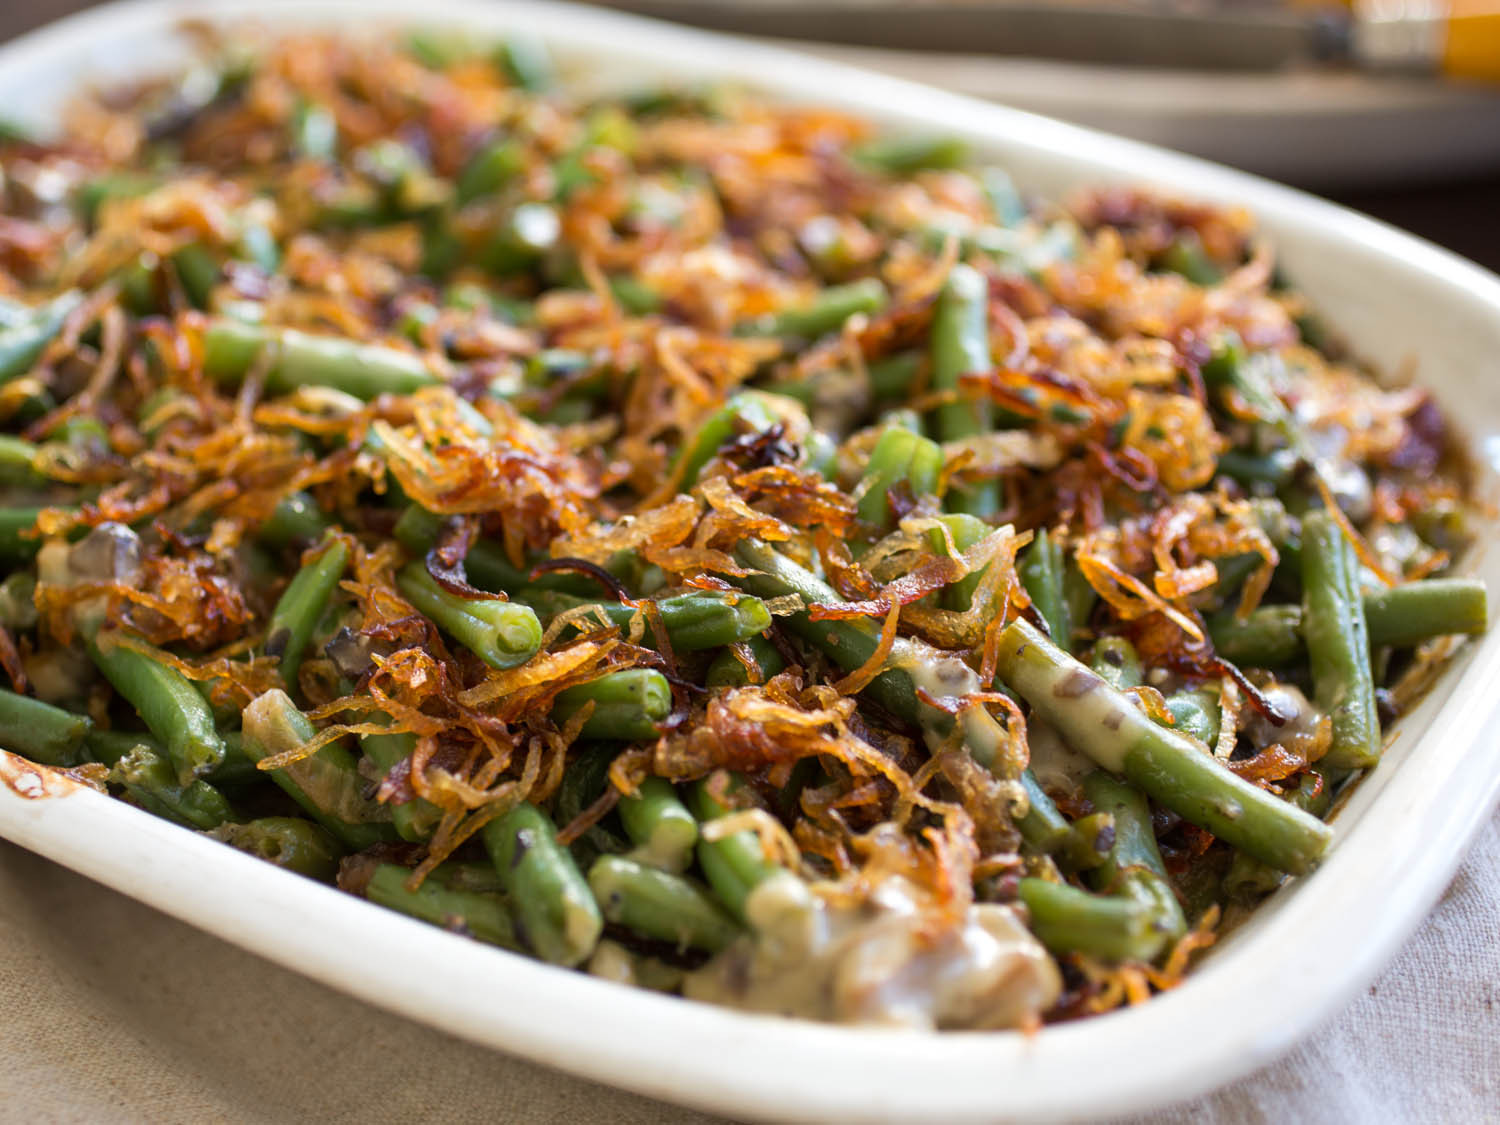 Best Green Bean Recipe For Thanksgiving
 The Ultimate Homemade Green Bean Casserole Recipe